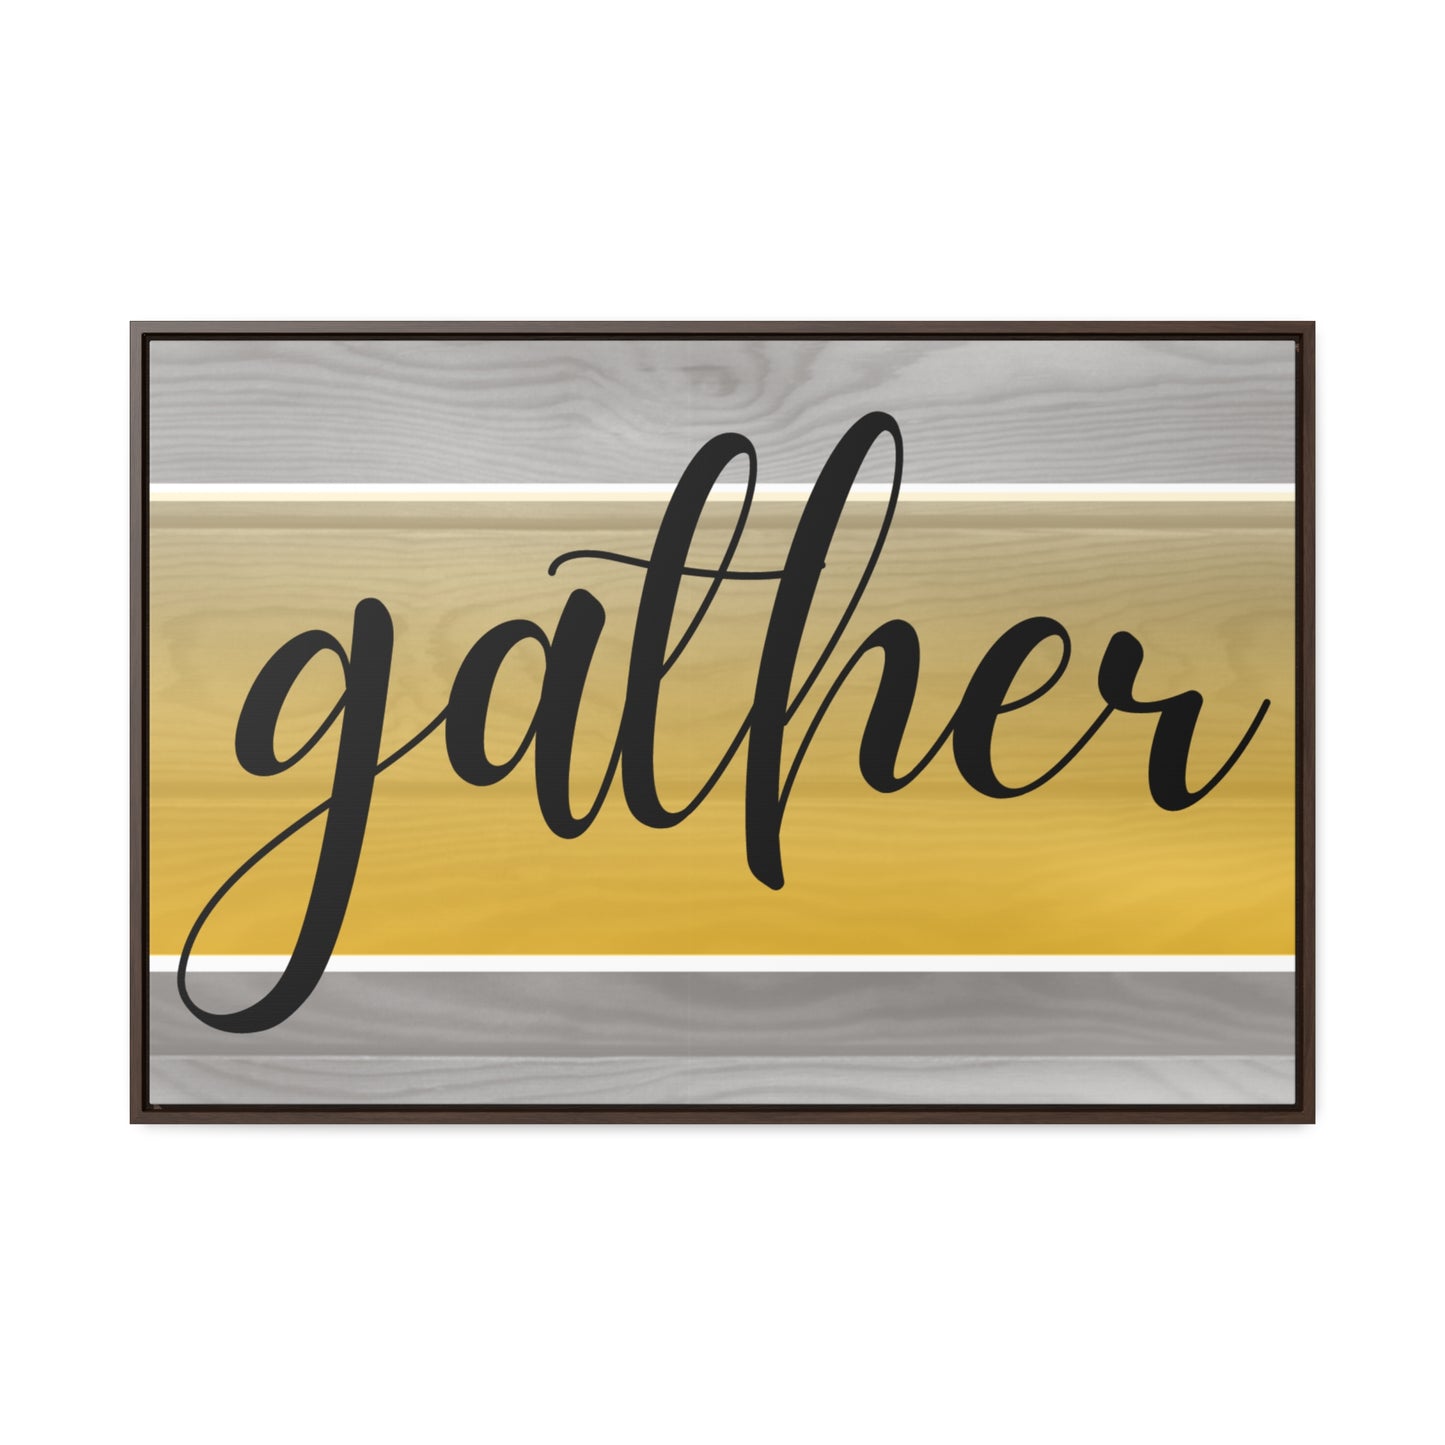 Christian Wall Art: Gather (Floating Frame)